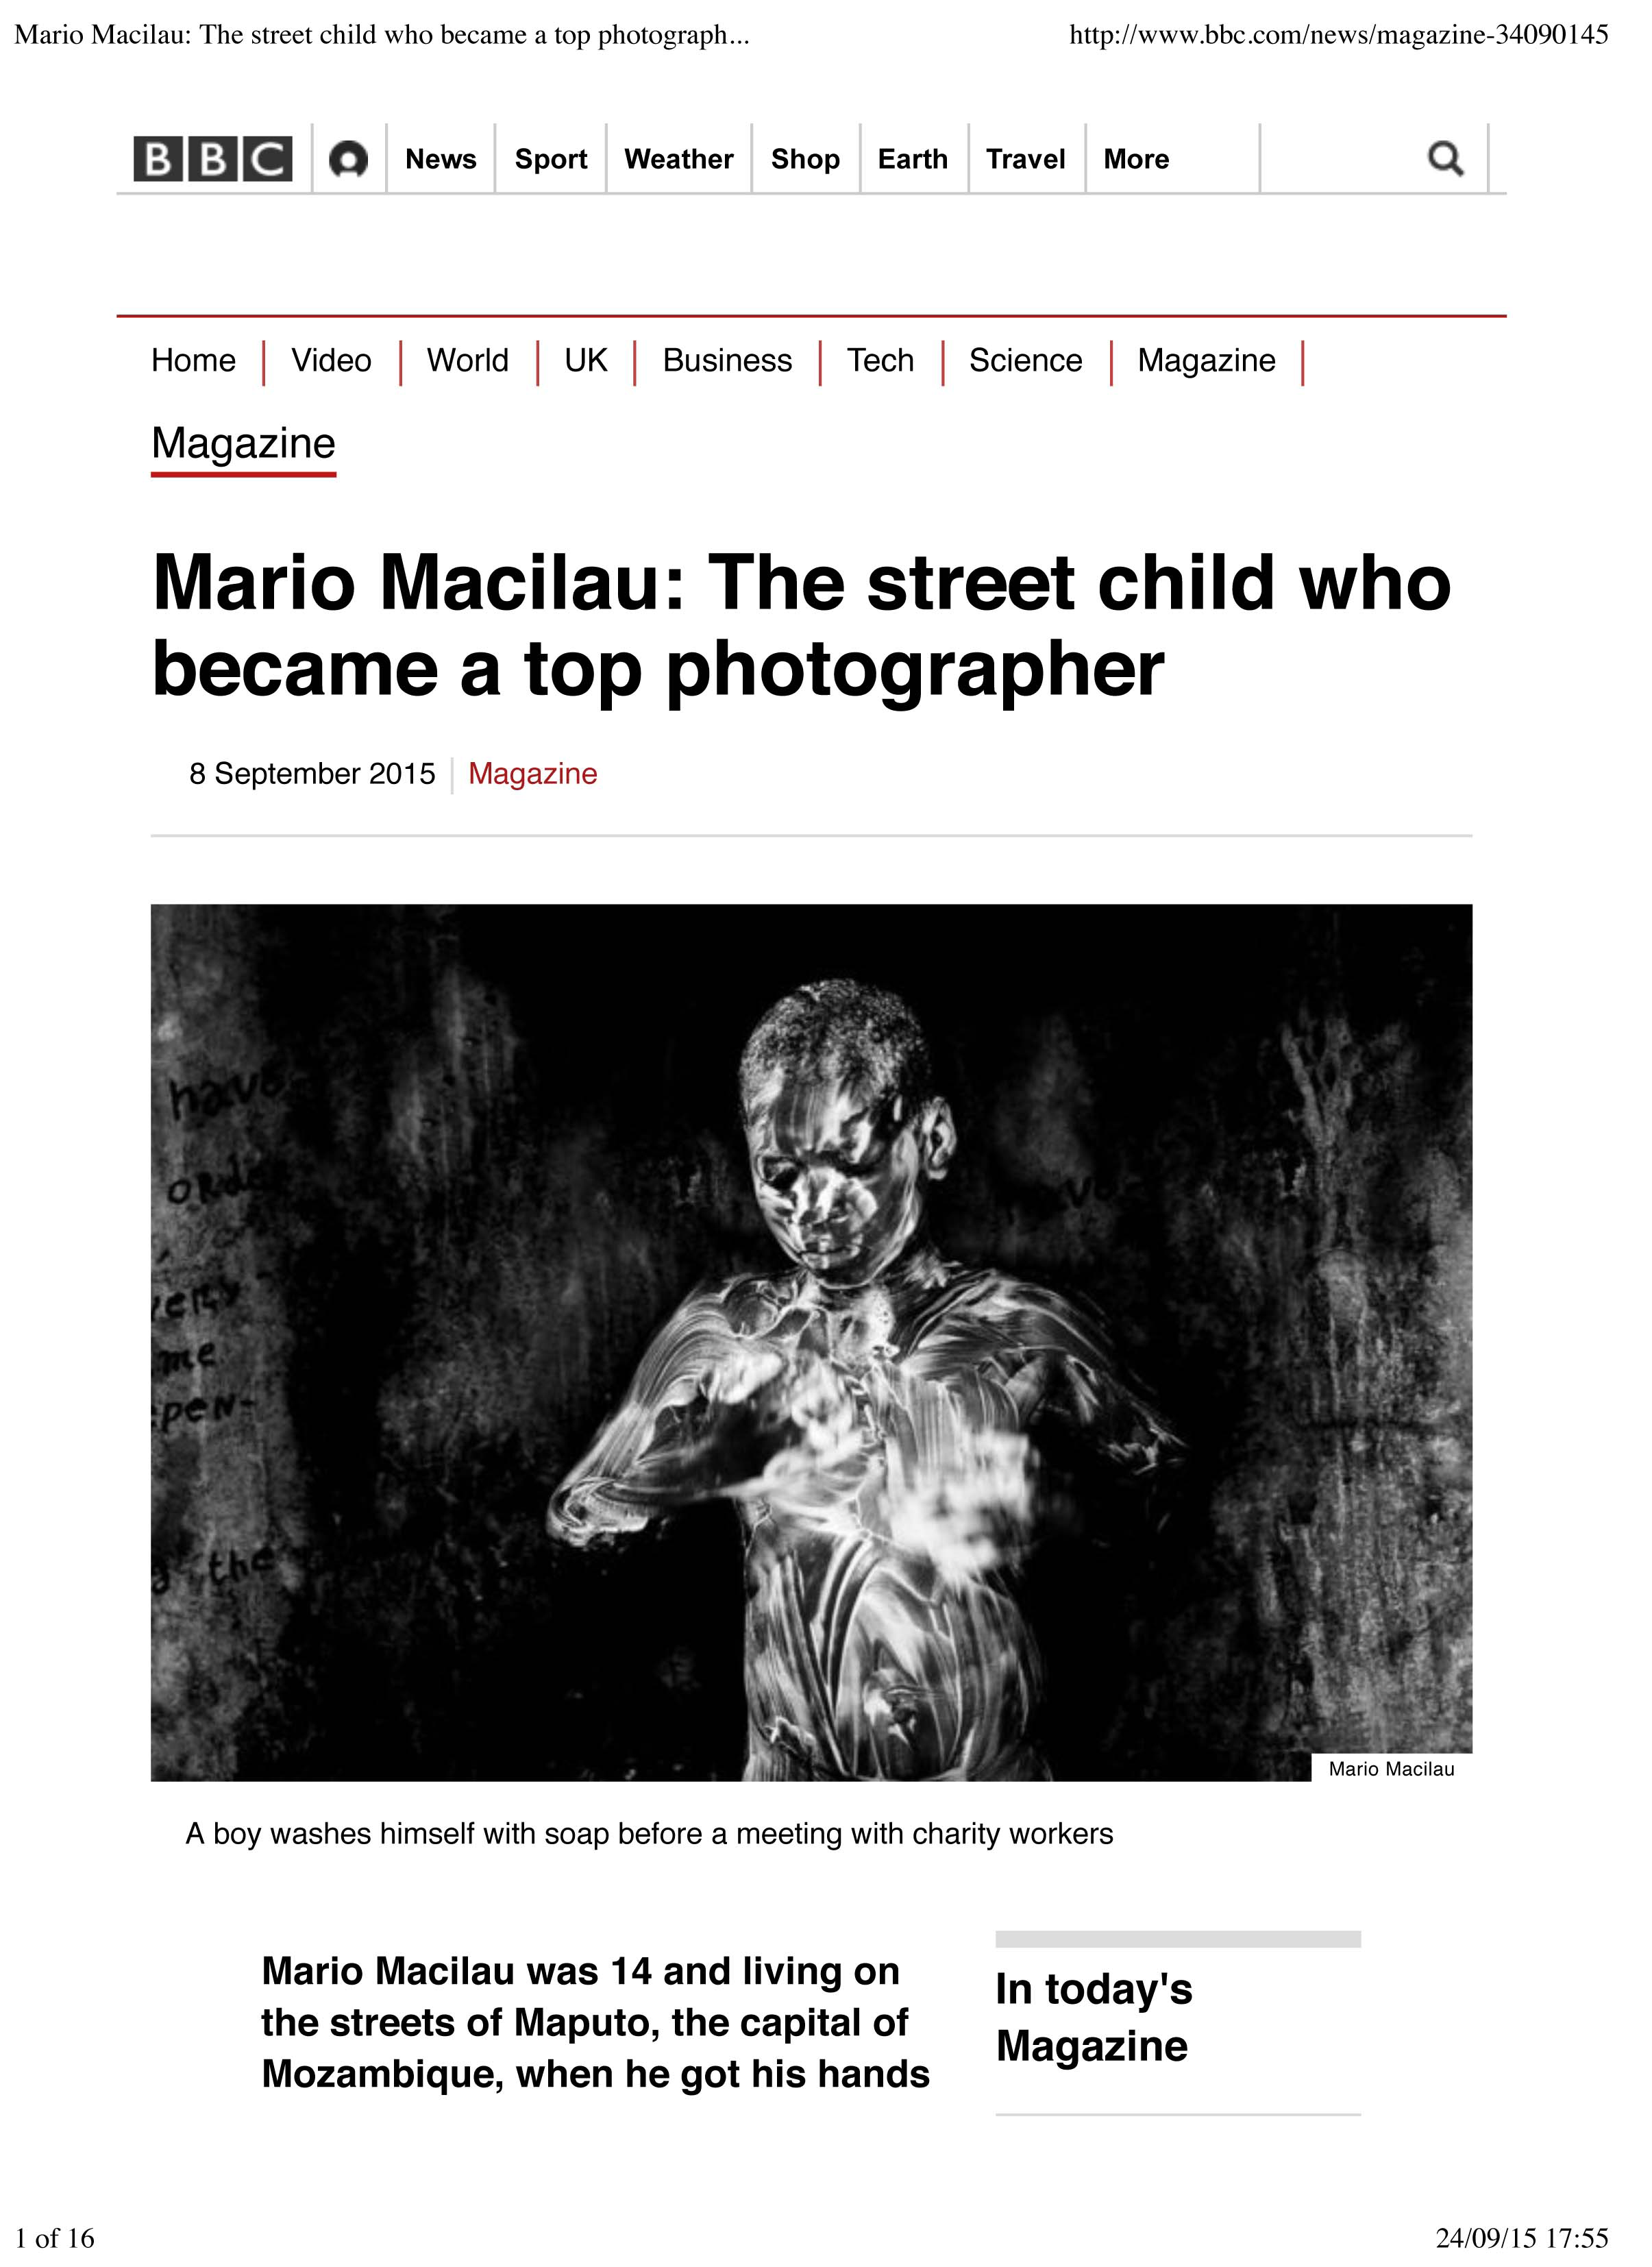 William Kremer: Mario Macilau: The street child who became a top